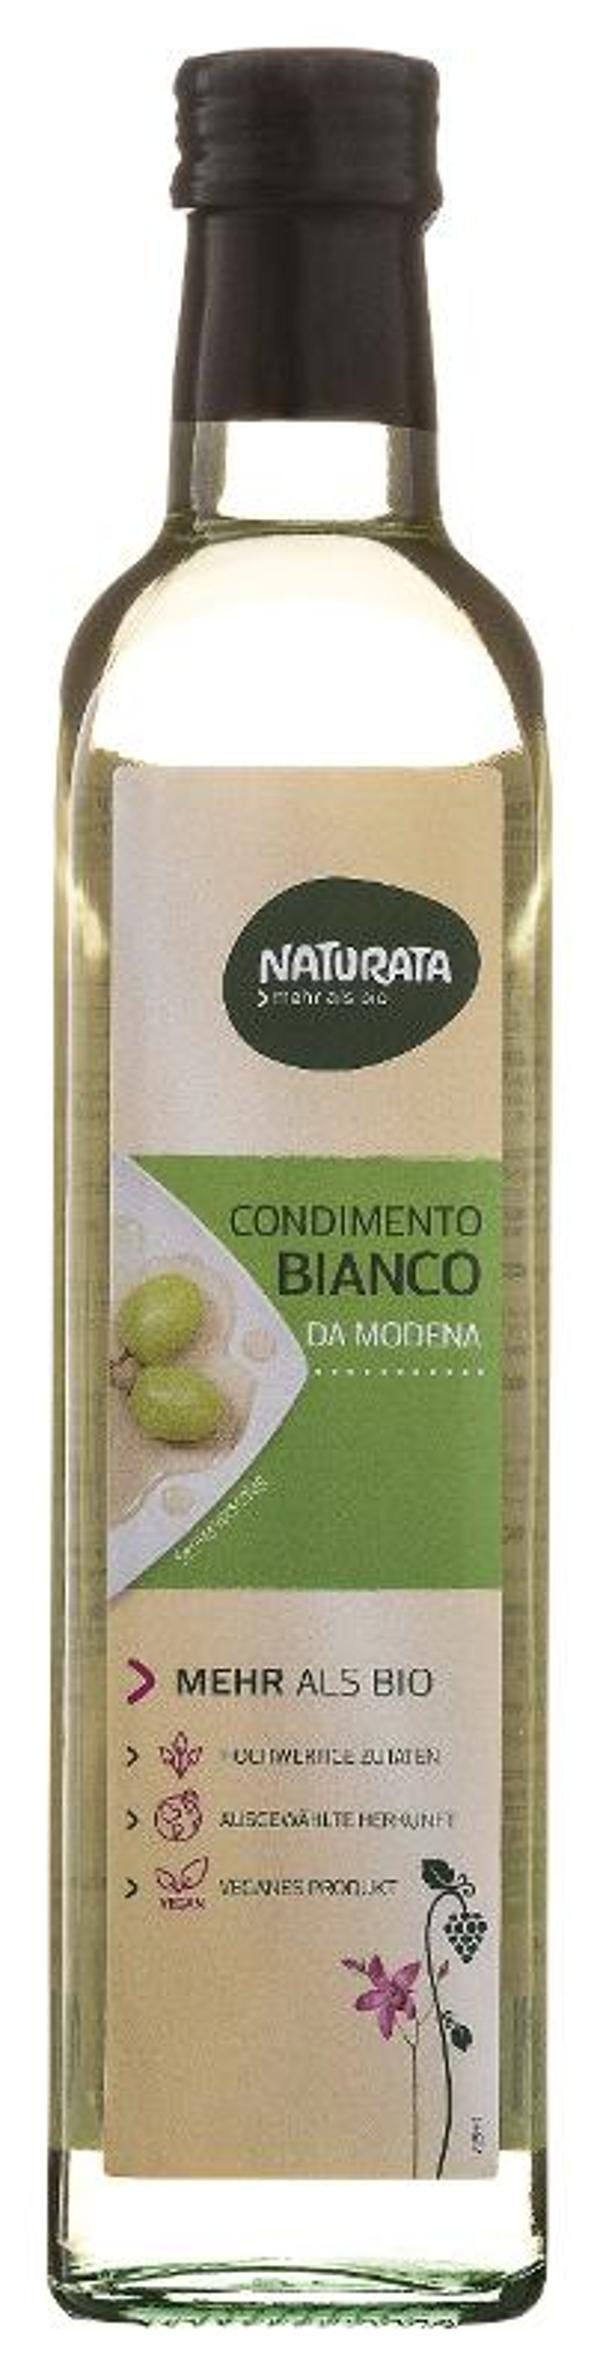 Produktfoto zu Condimento Balsamico Bianco